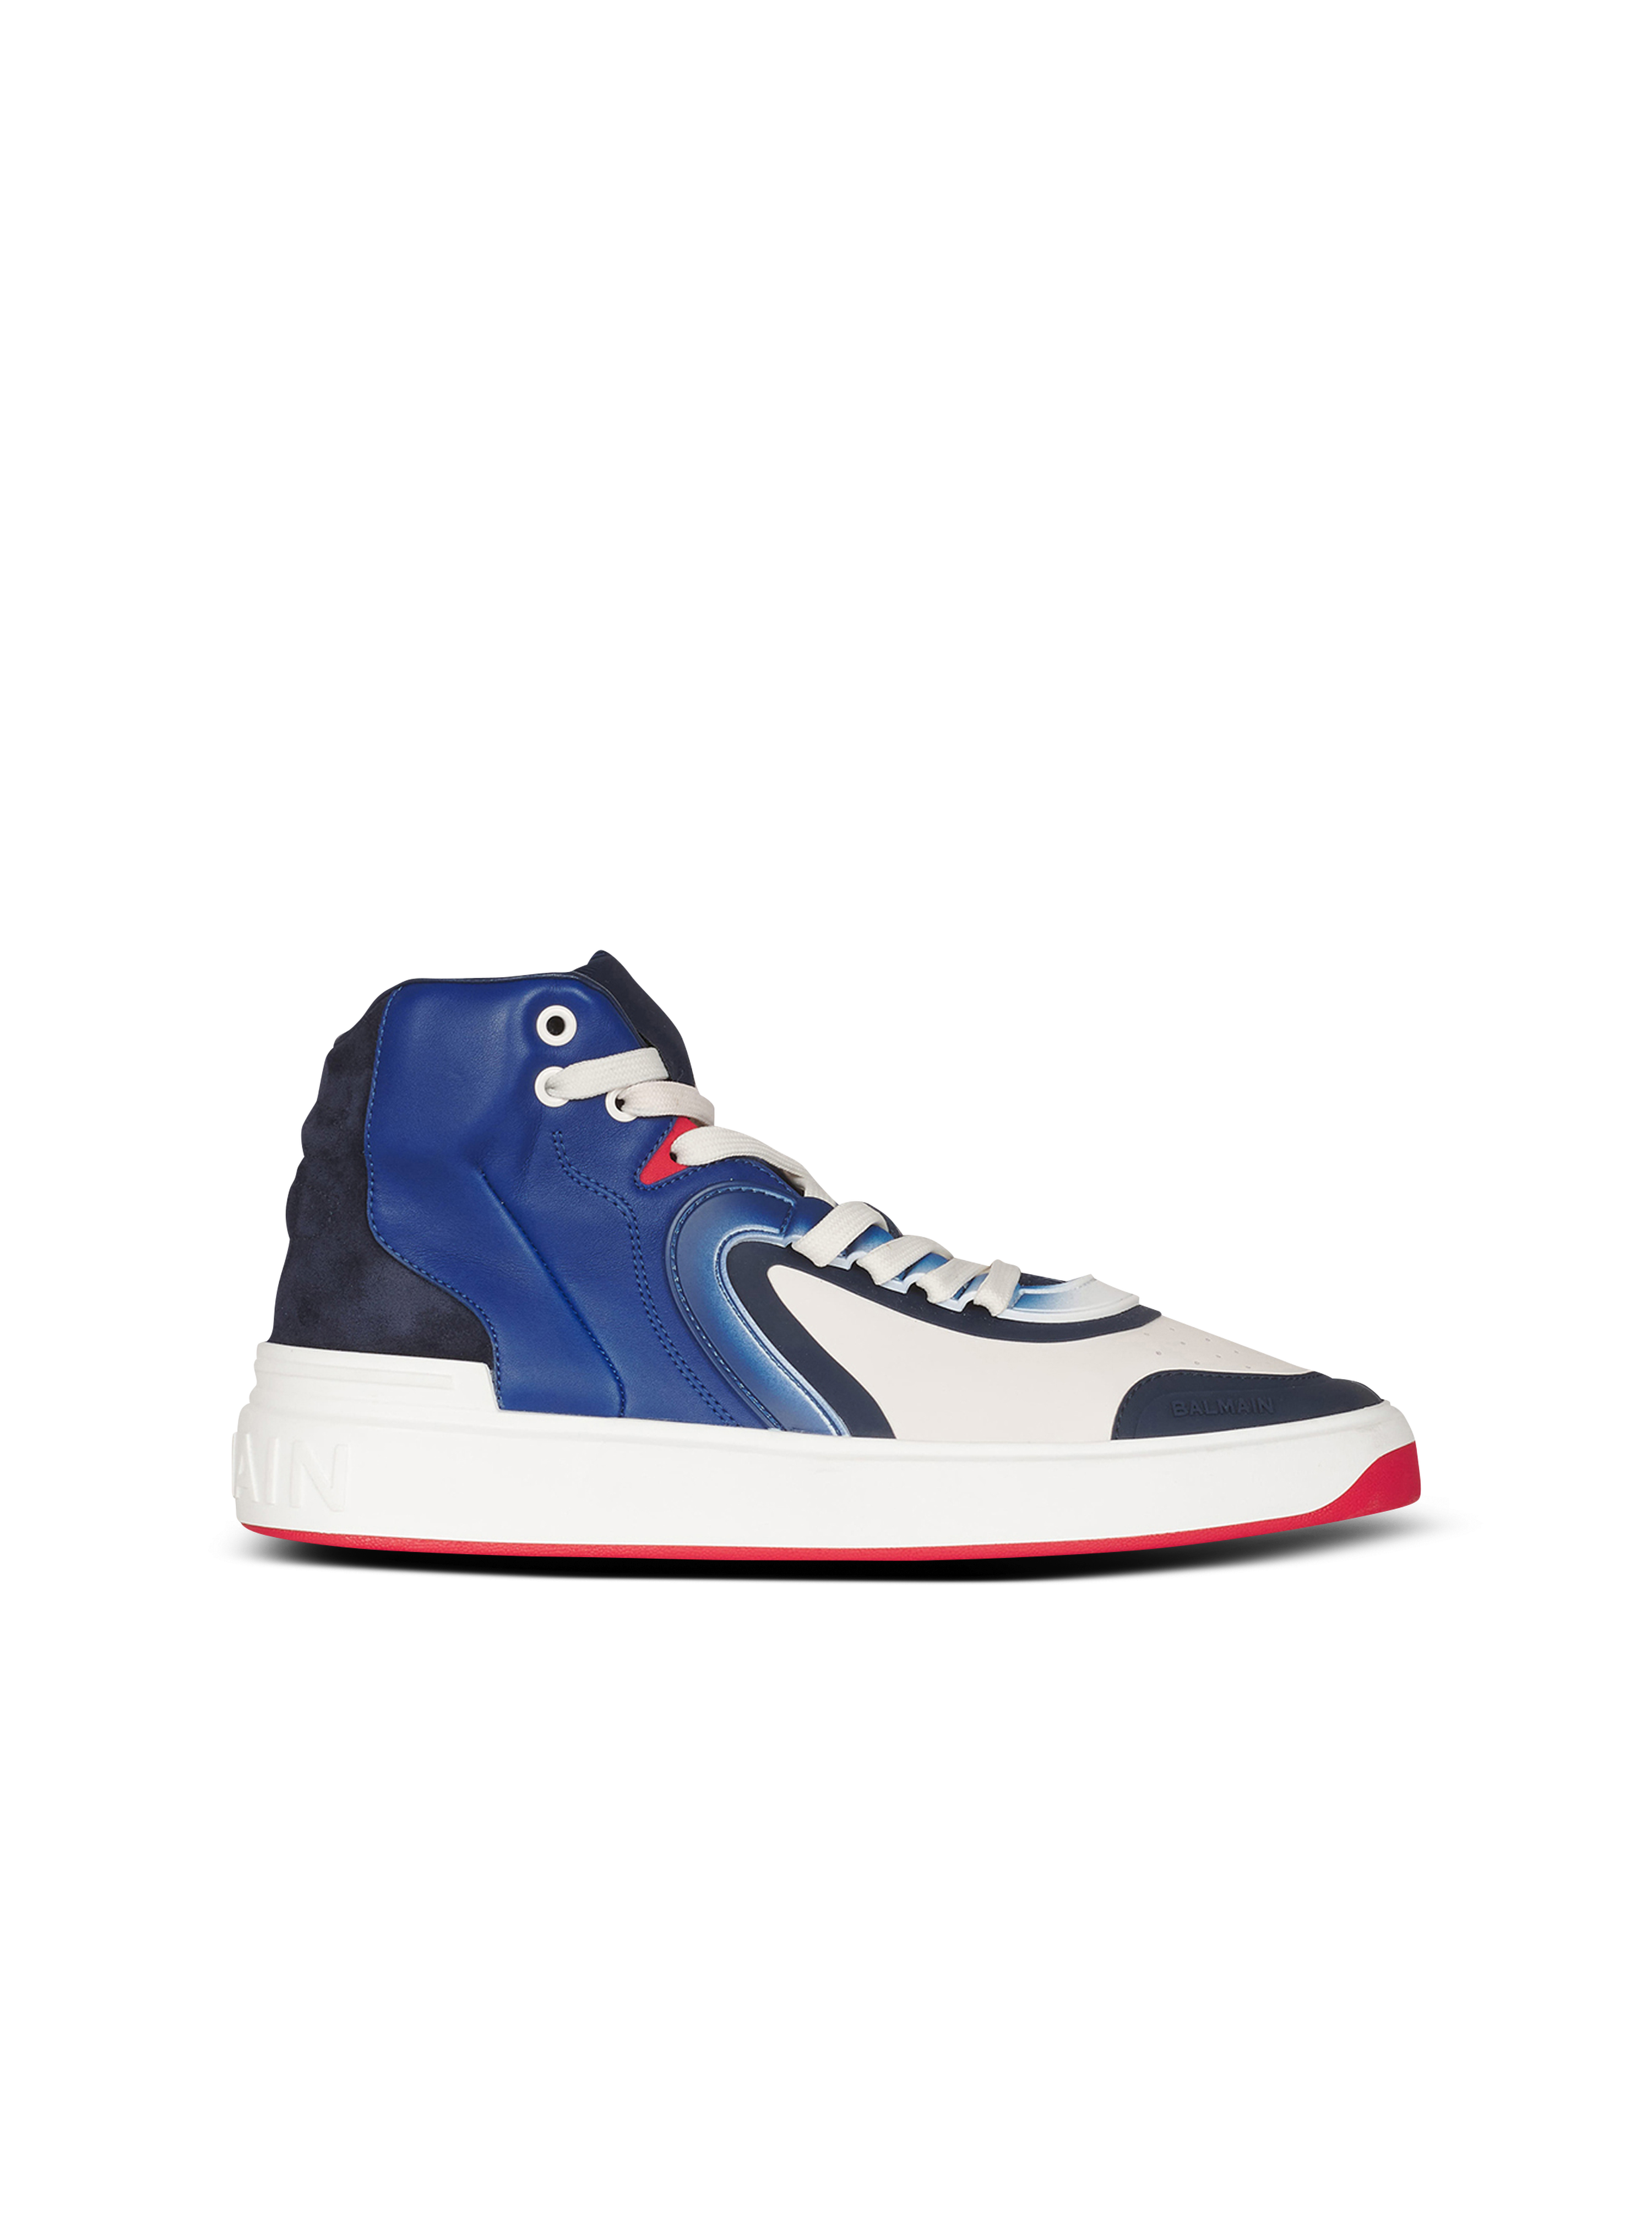 HIGH SUMMER CAPSULE - calfskin and suede B-Skate sneakers, blue